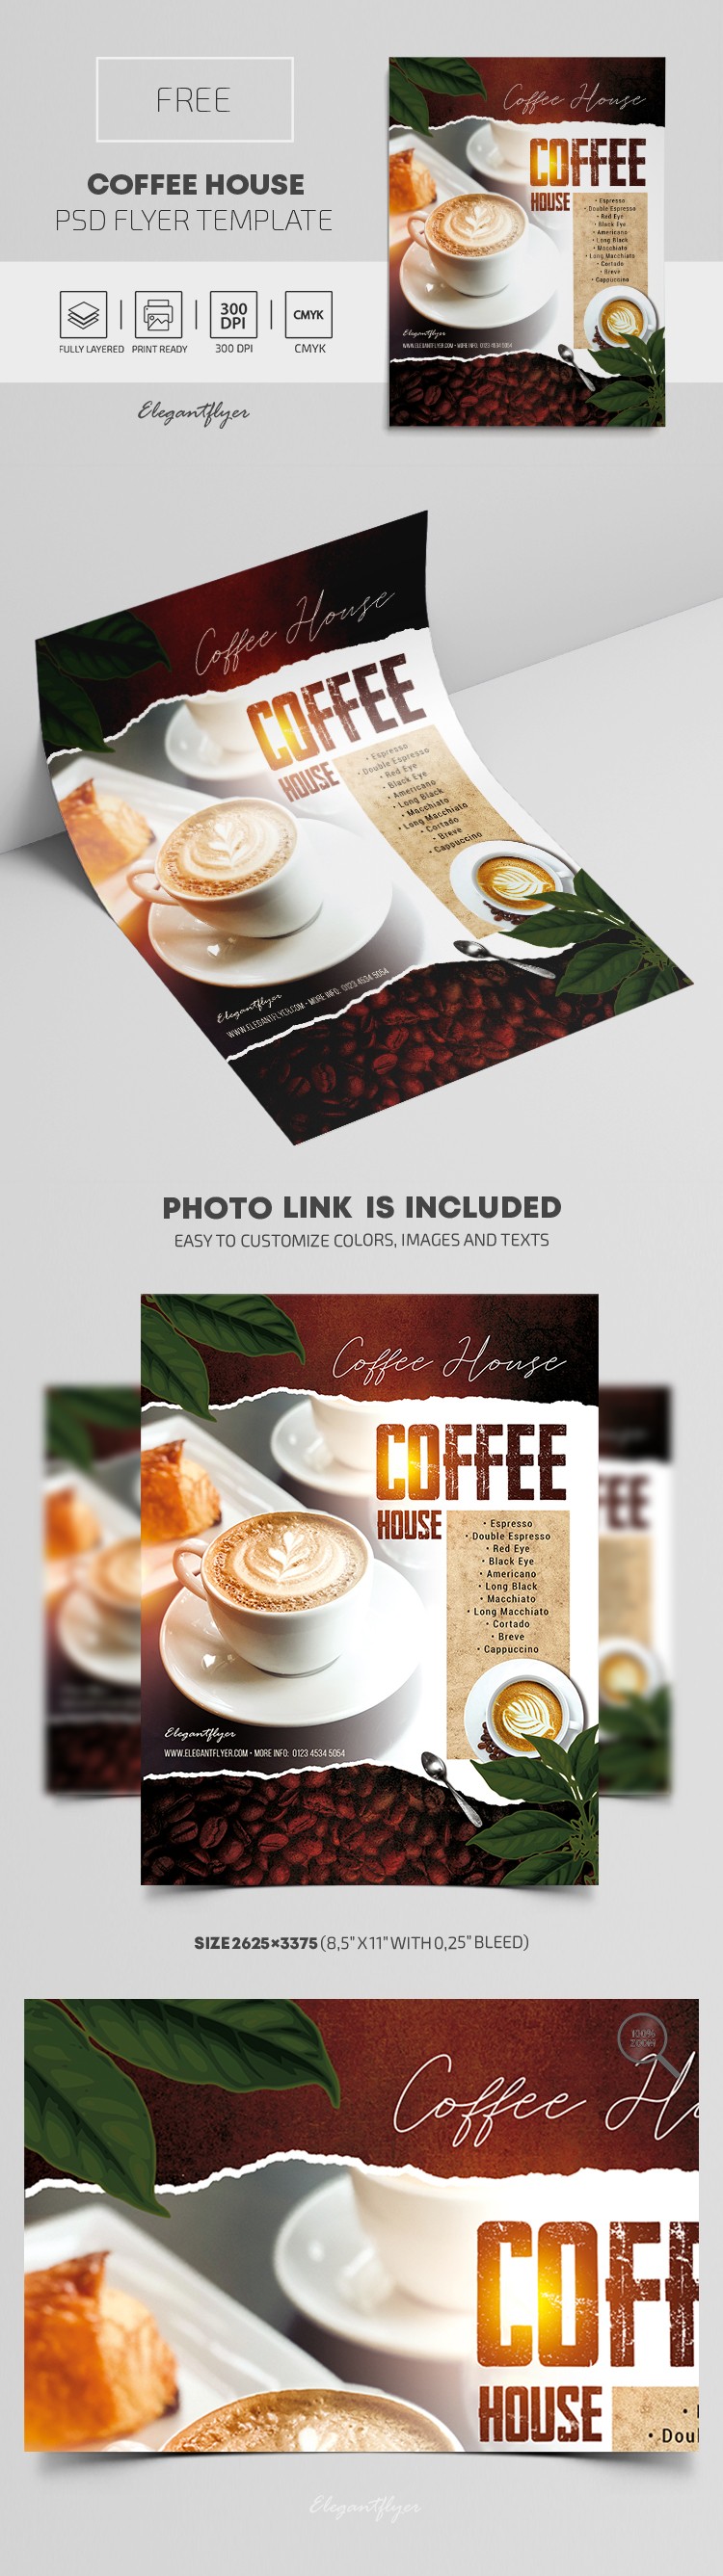 Coffee House Flyer by ElegantFlyer